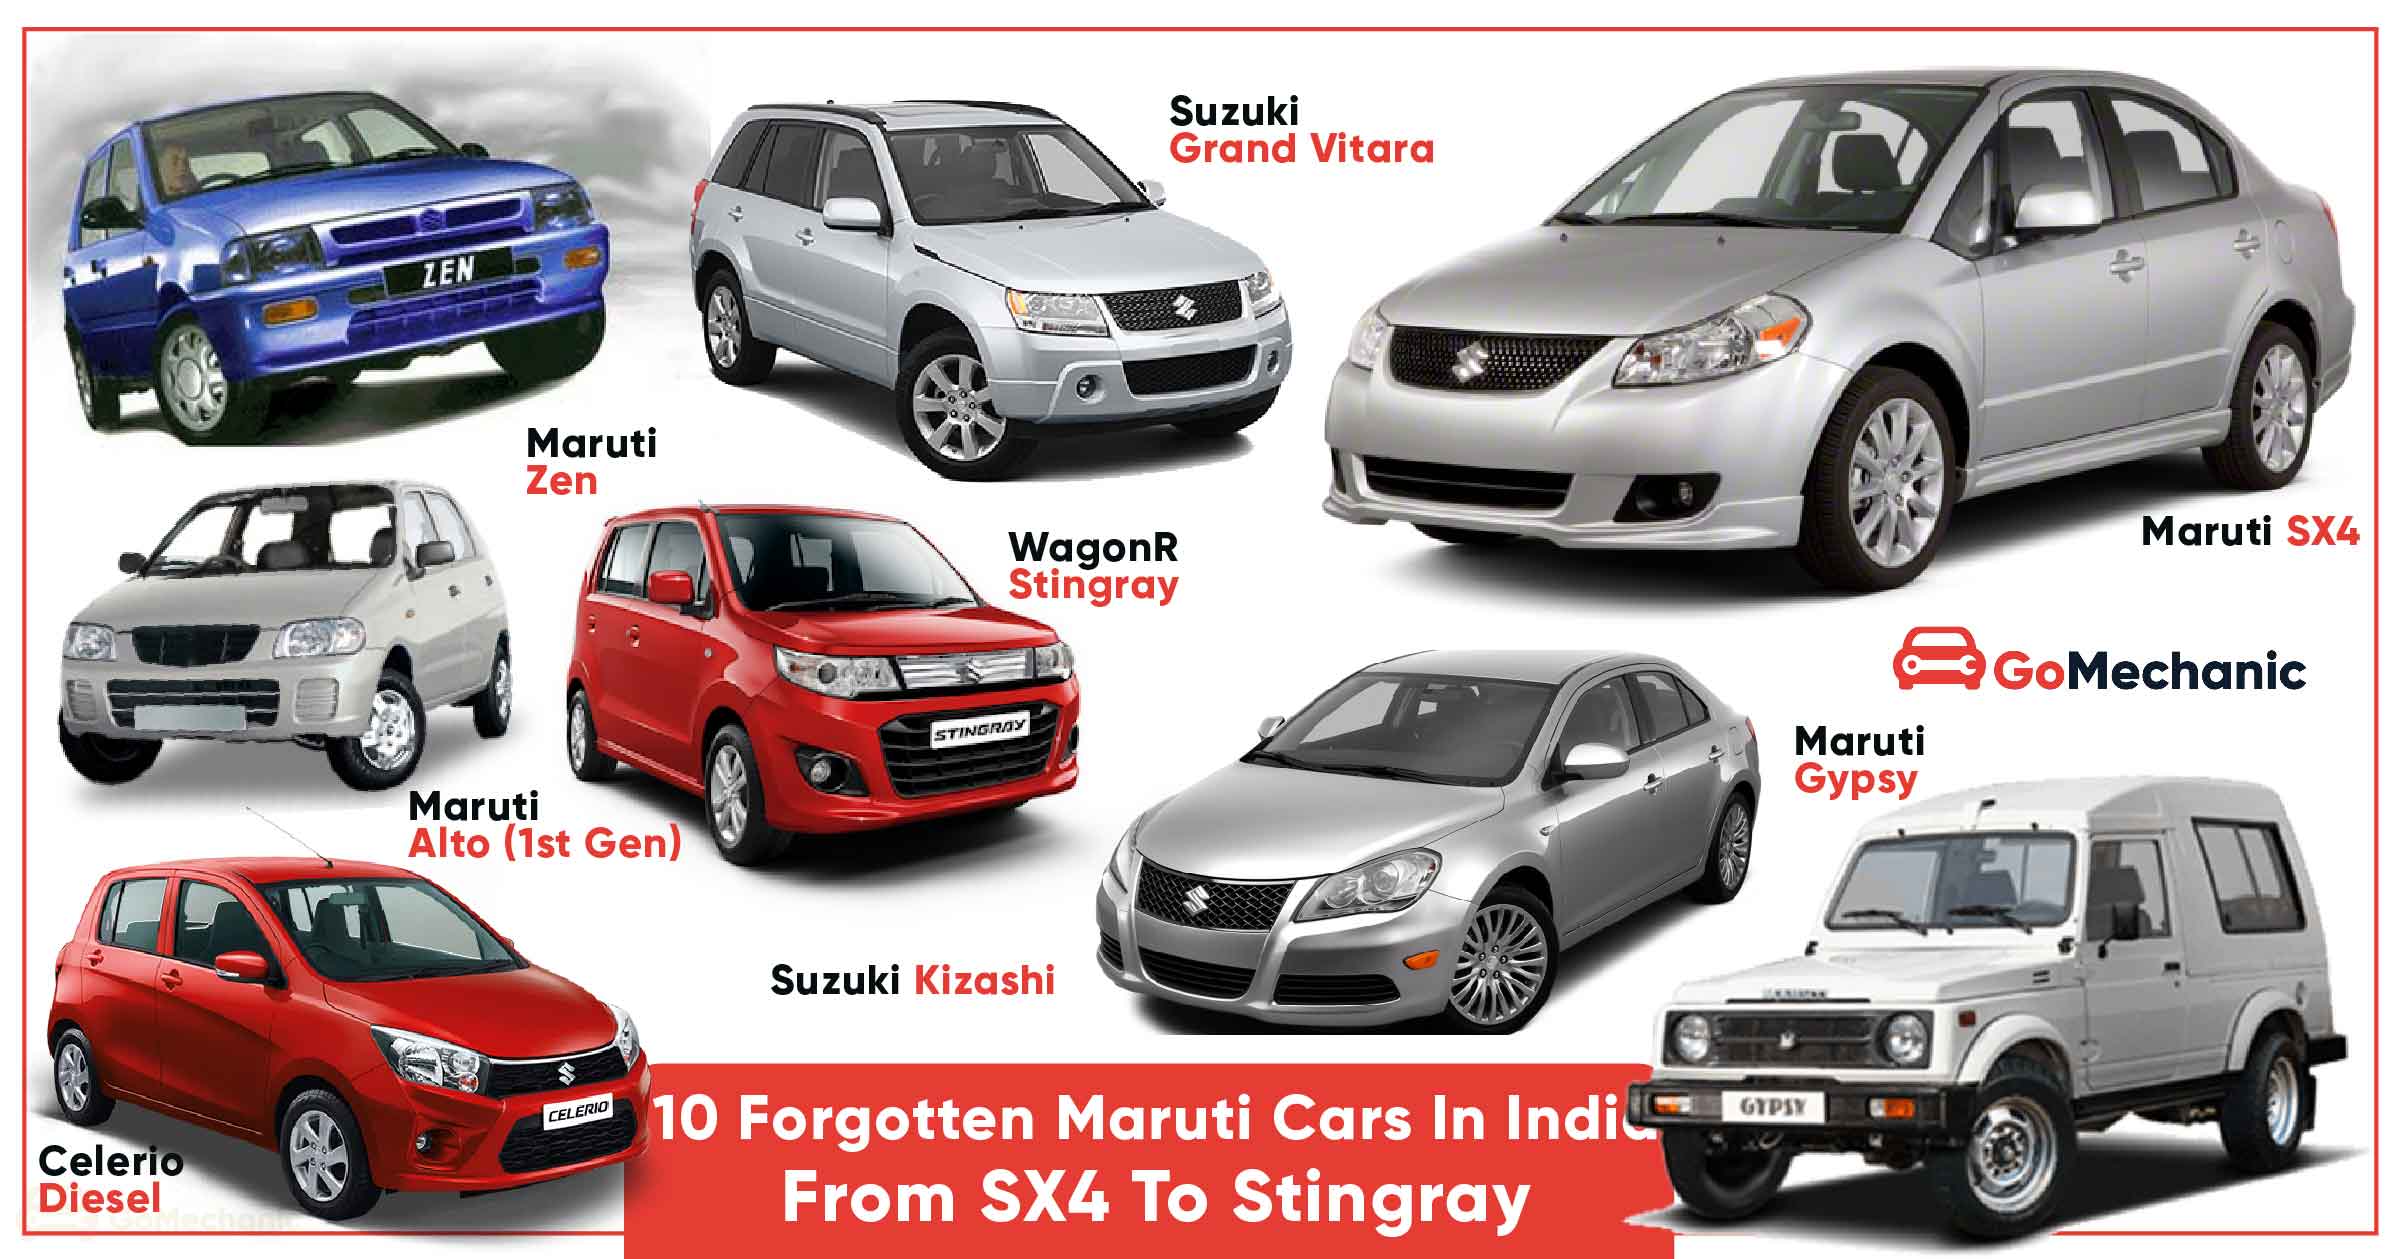 10 Forgotten Maruti Suzuki Cars In India pt2